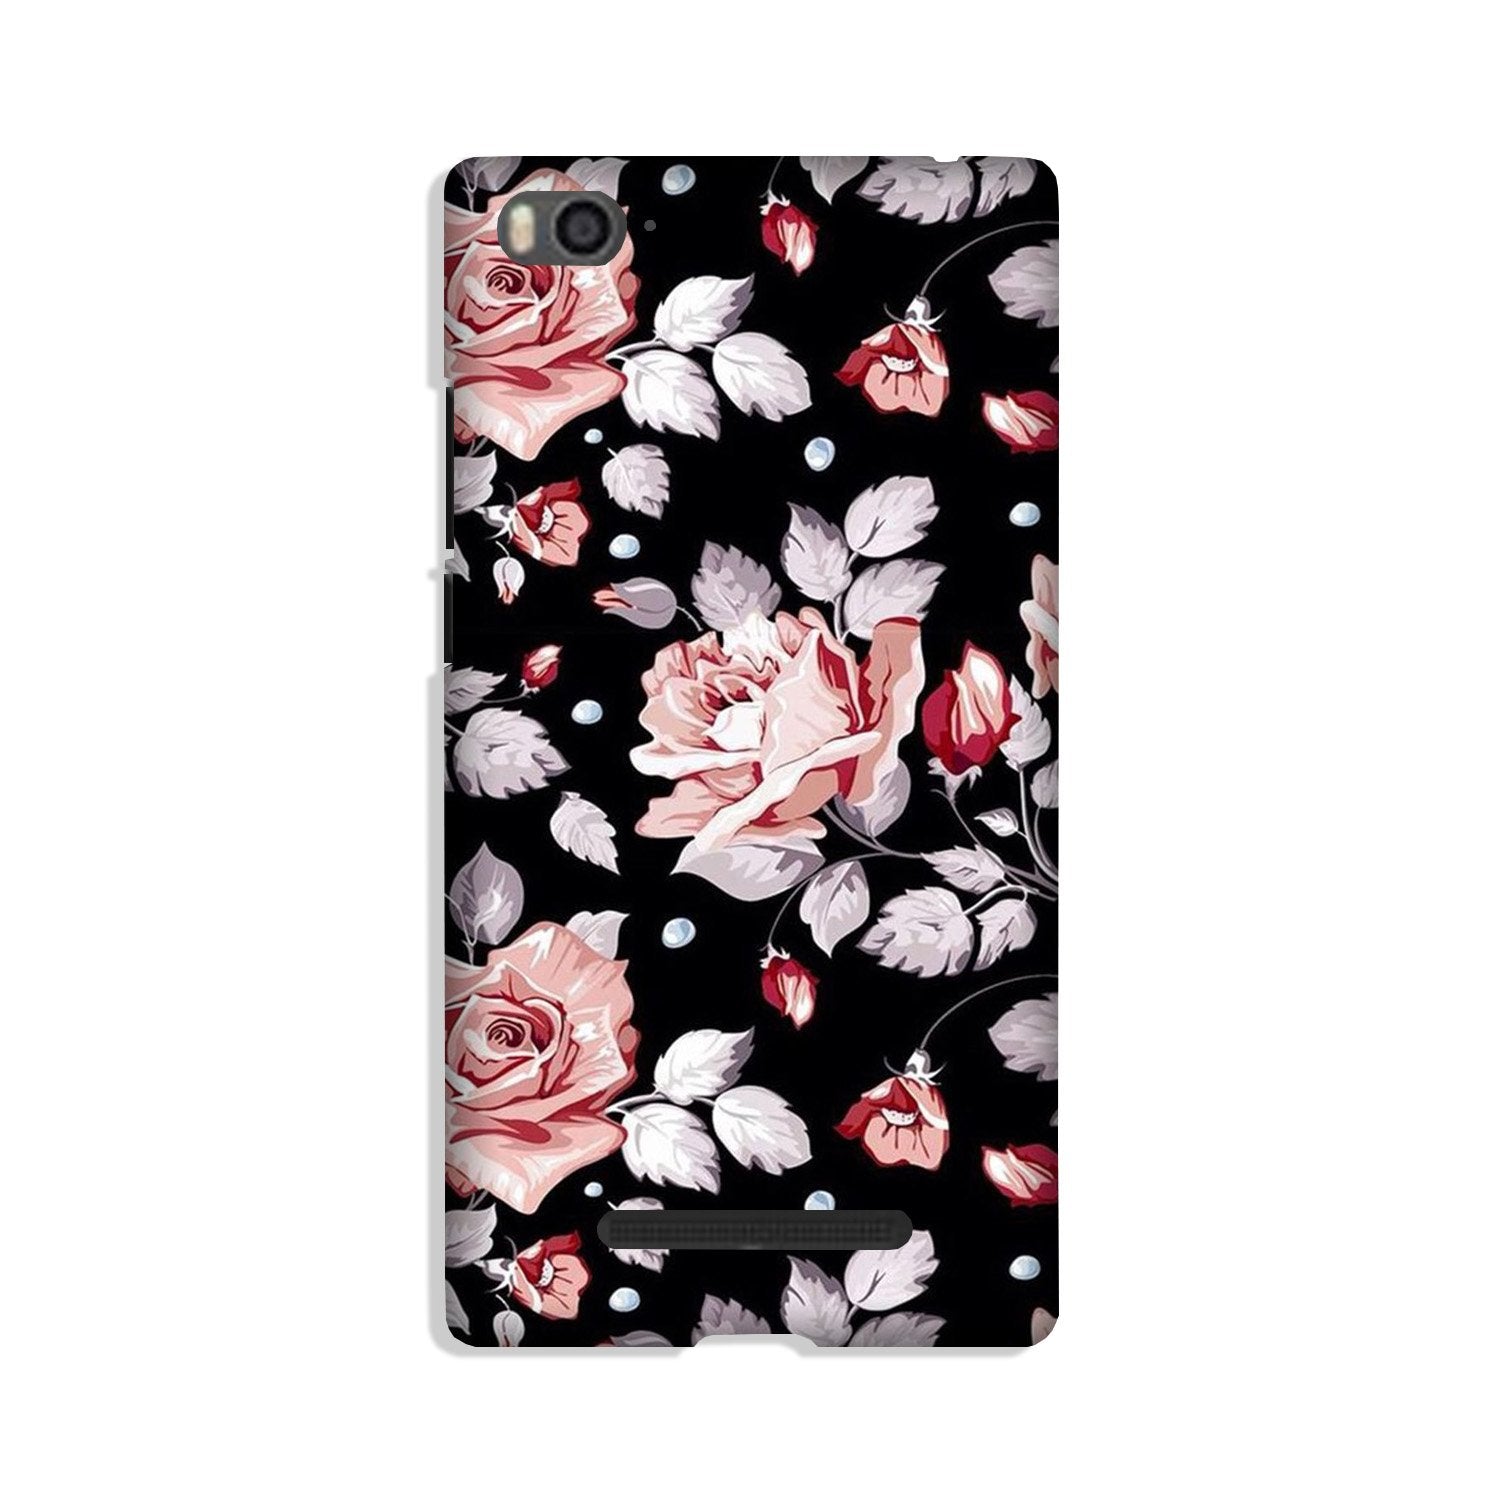 Pink rose Case for Xiaomi Mi 4i